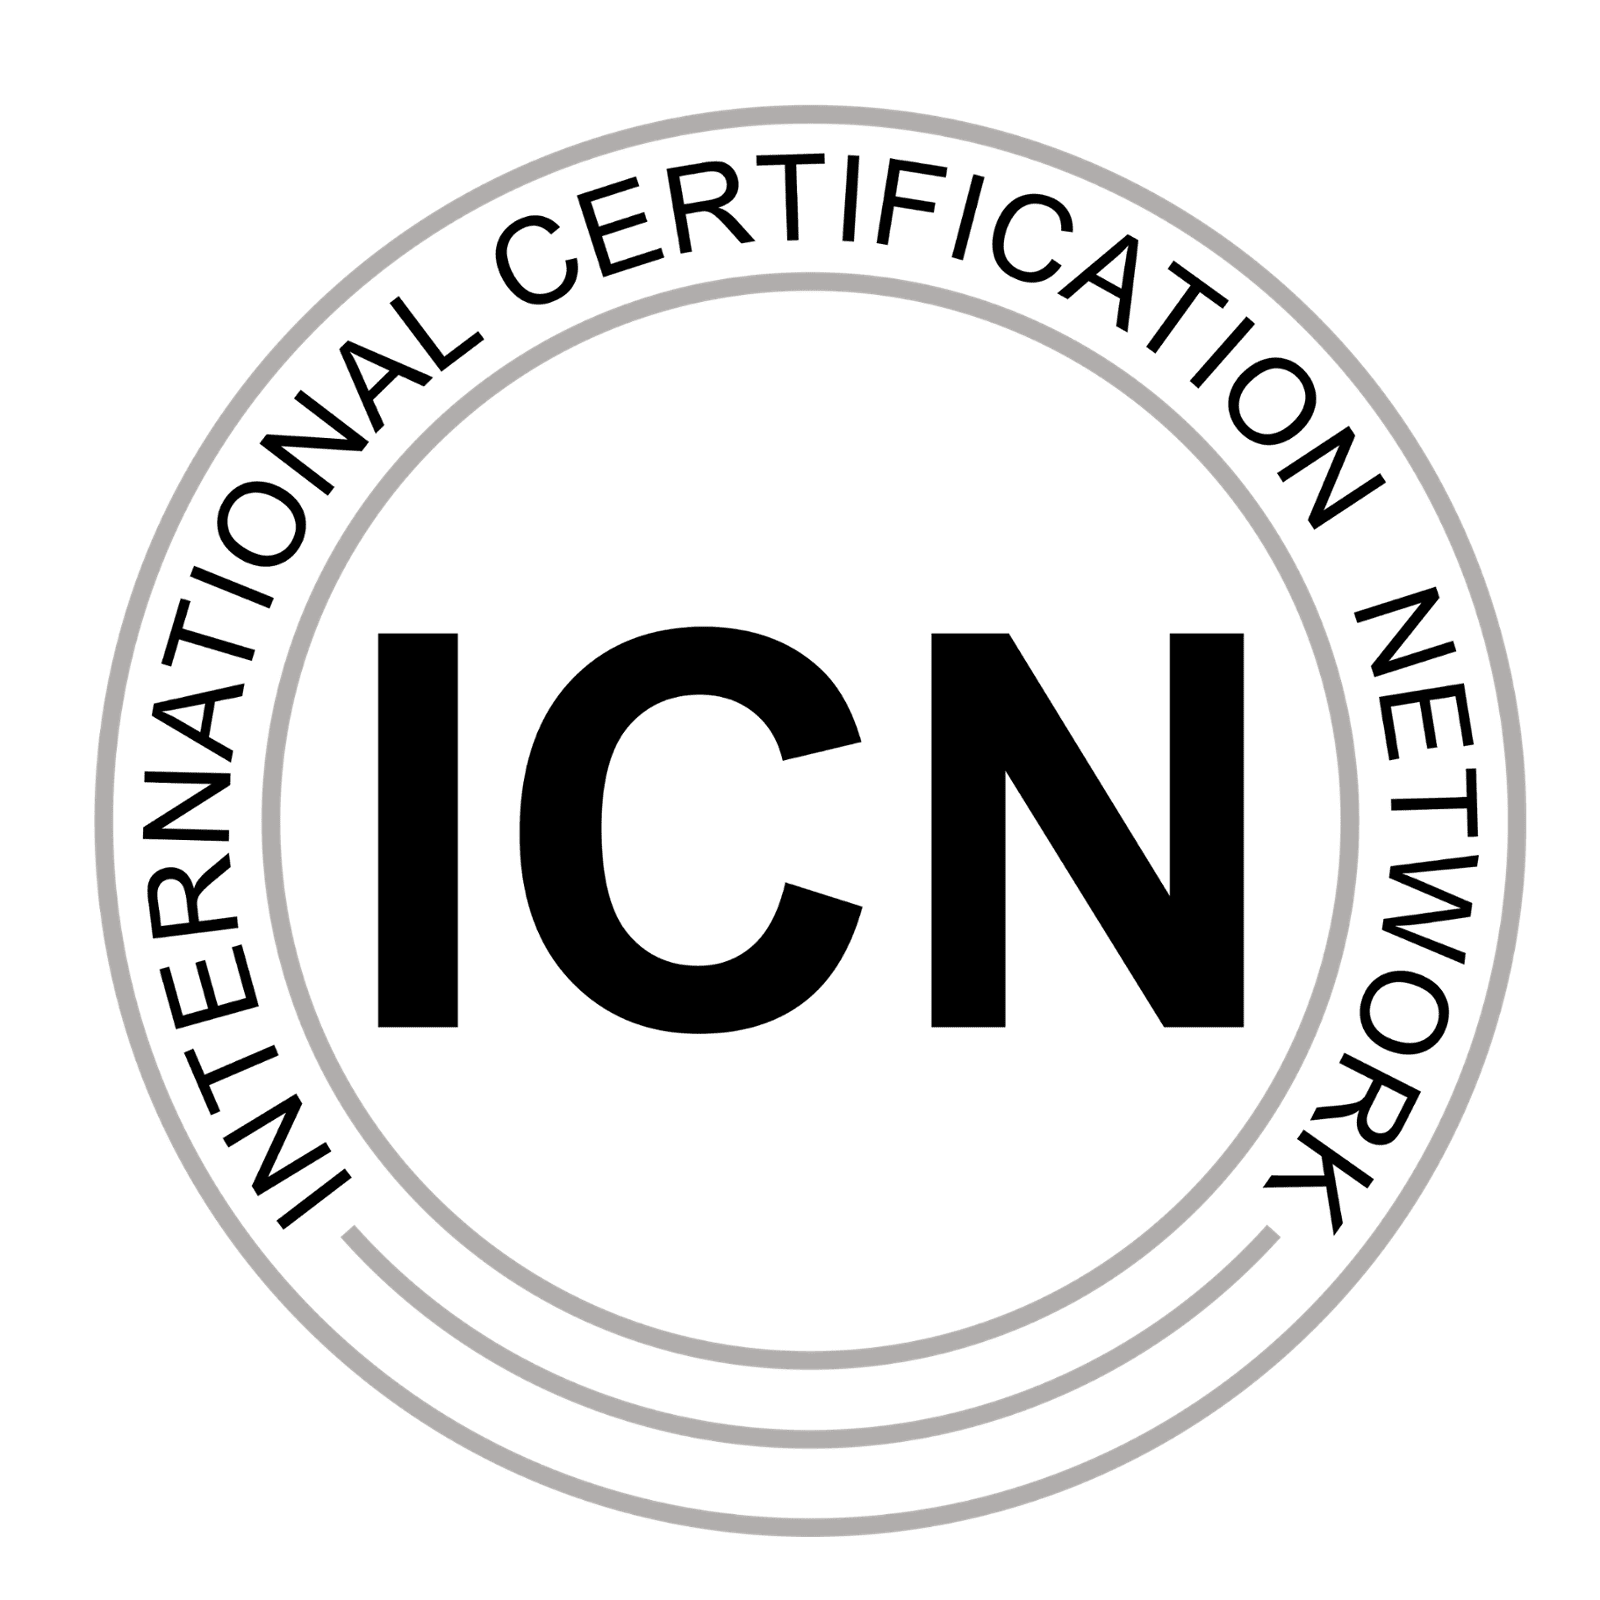 International Certification Network